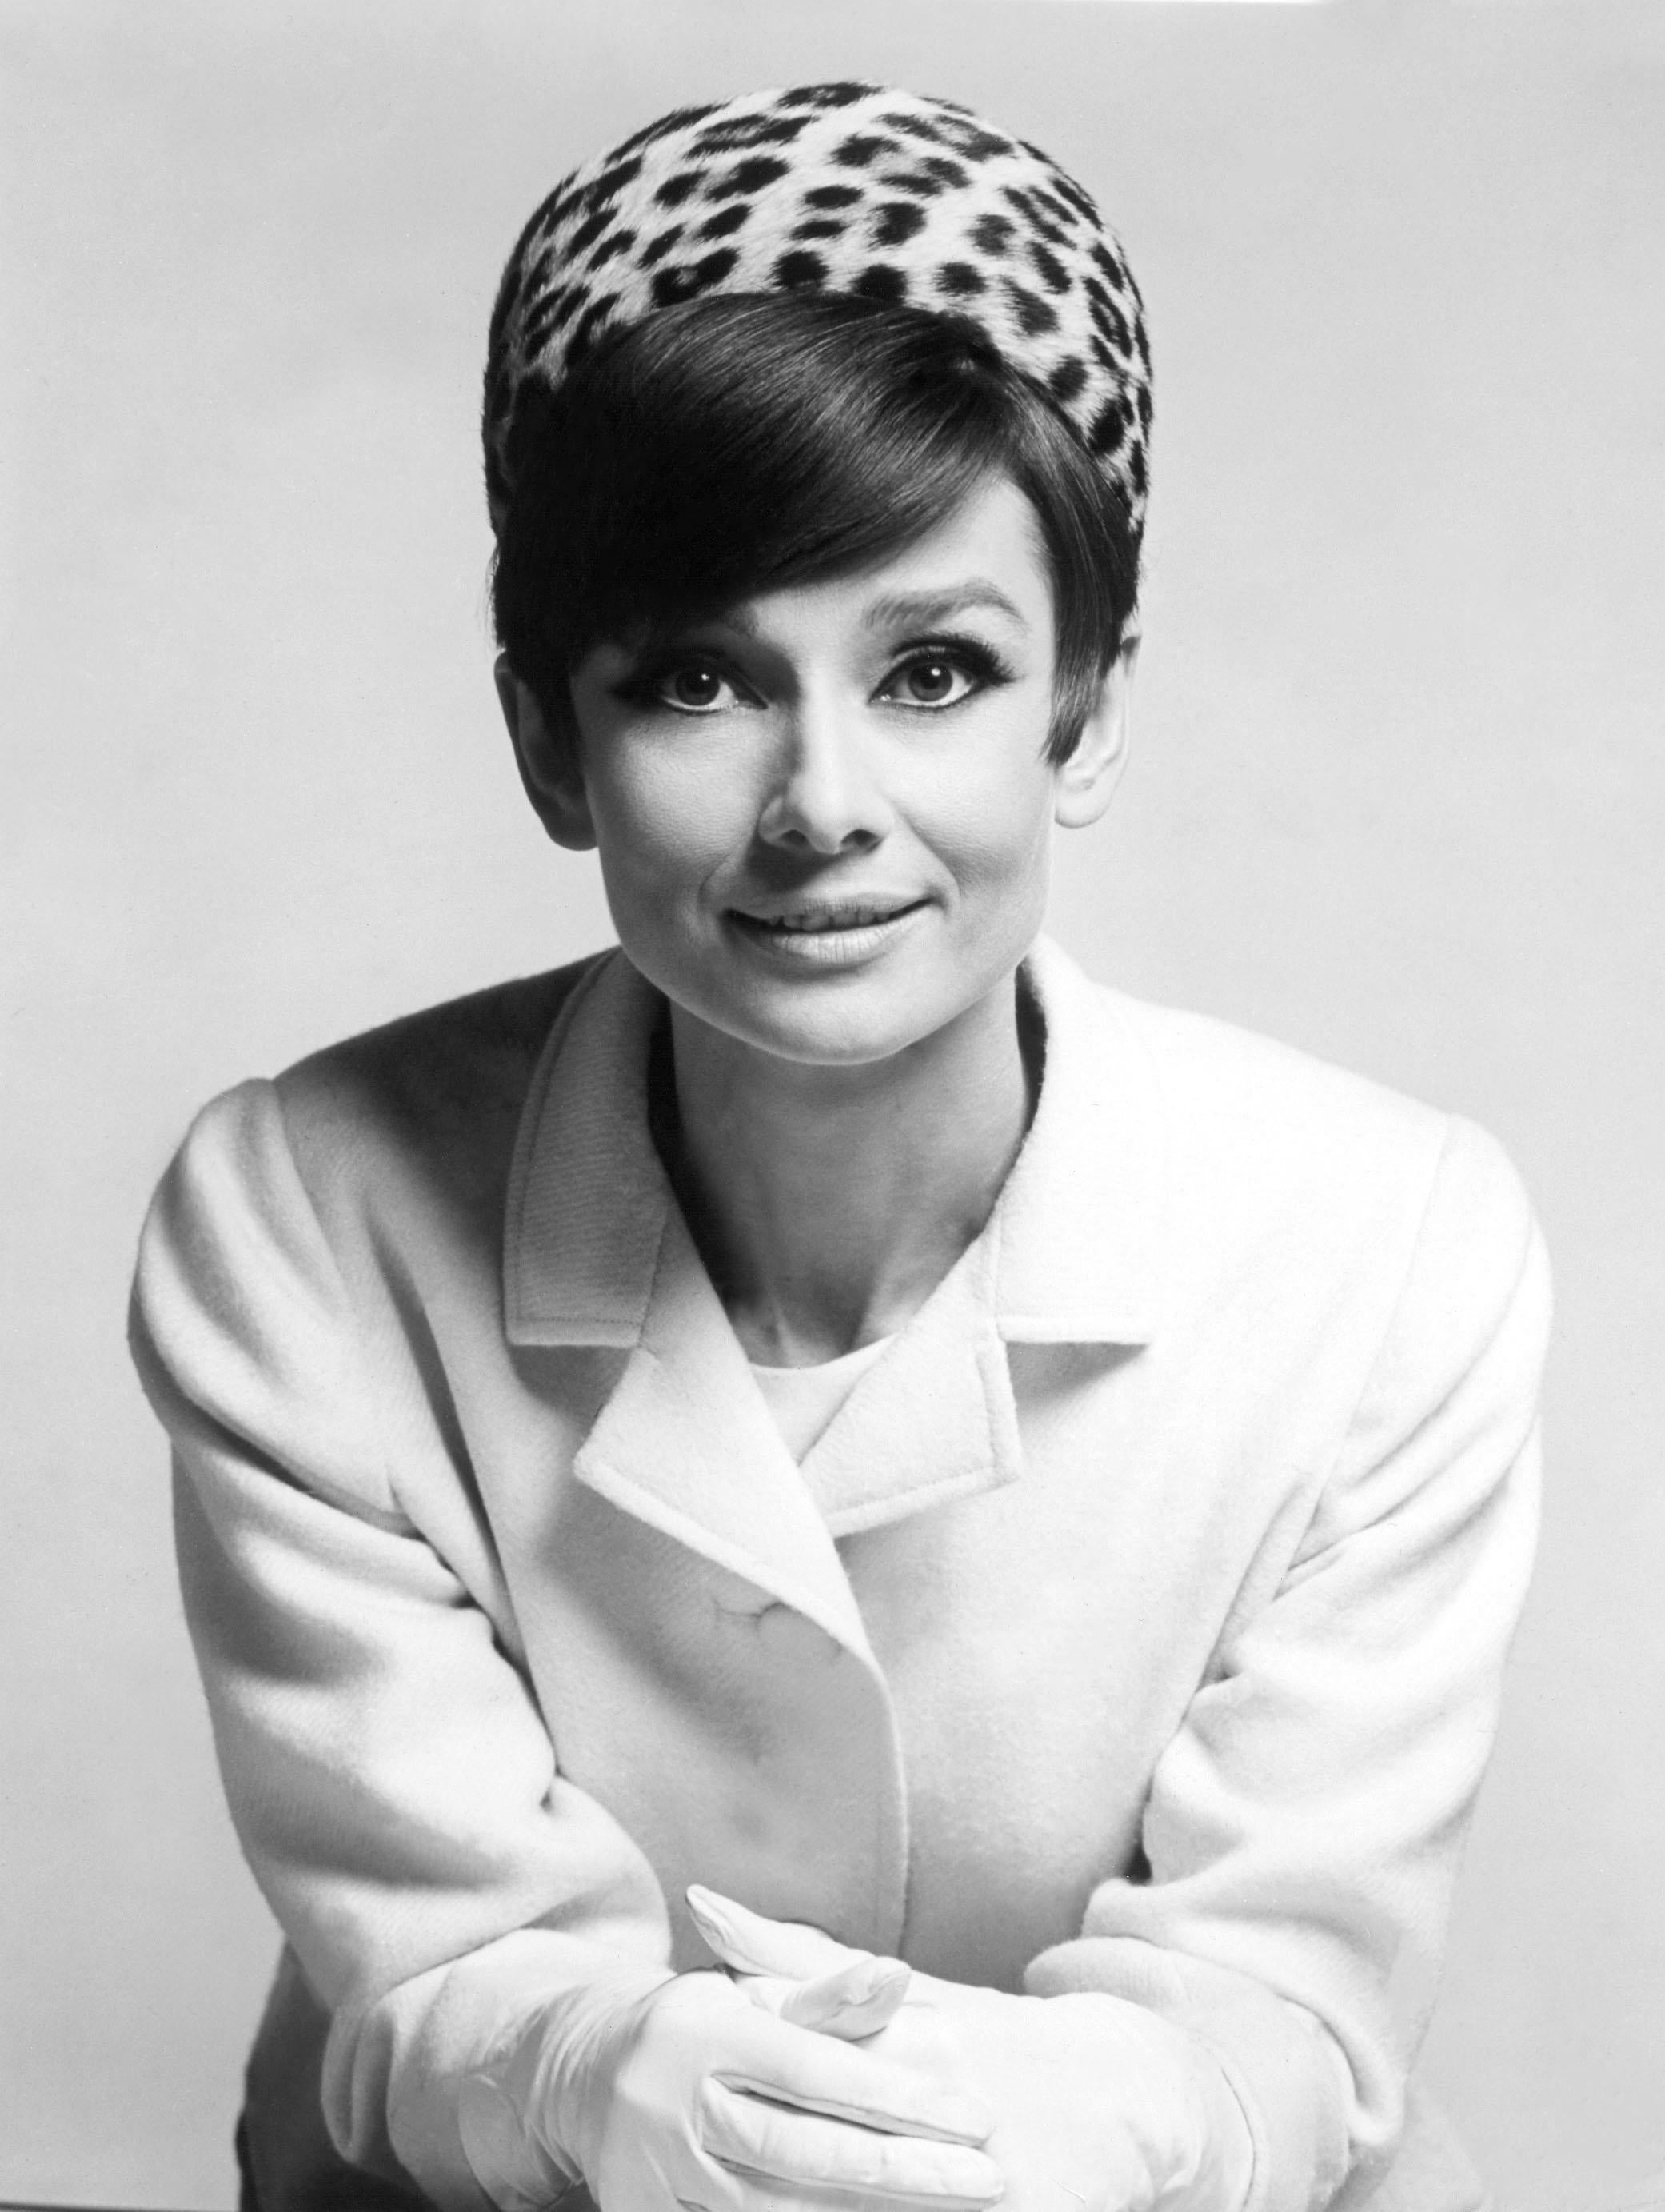 Unknown Portrait Photograph - Audrey Hepburn Smiling in Leopard Hat Globe Photos Fine Art Print